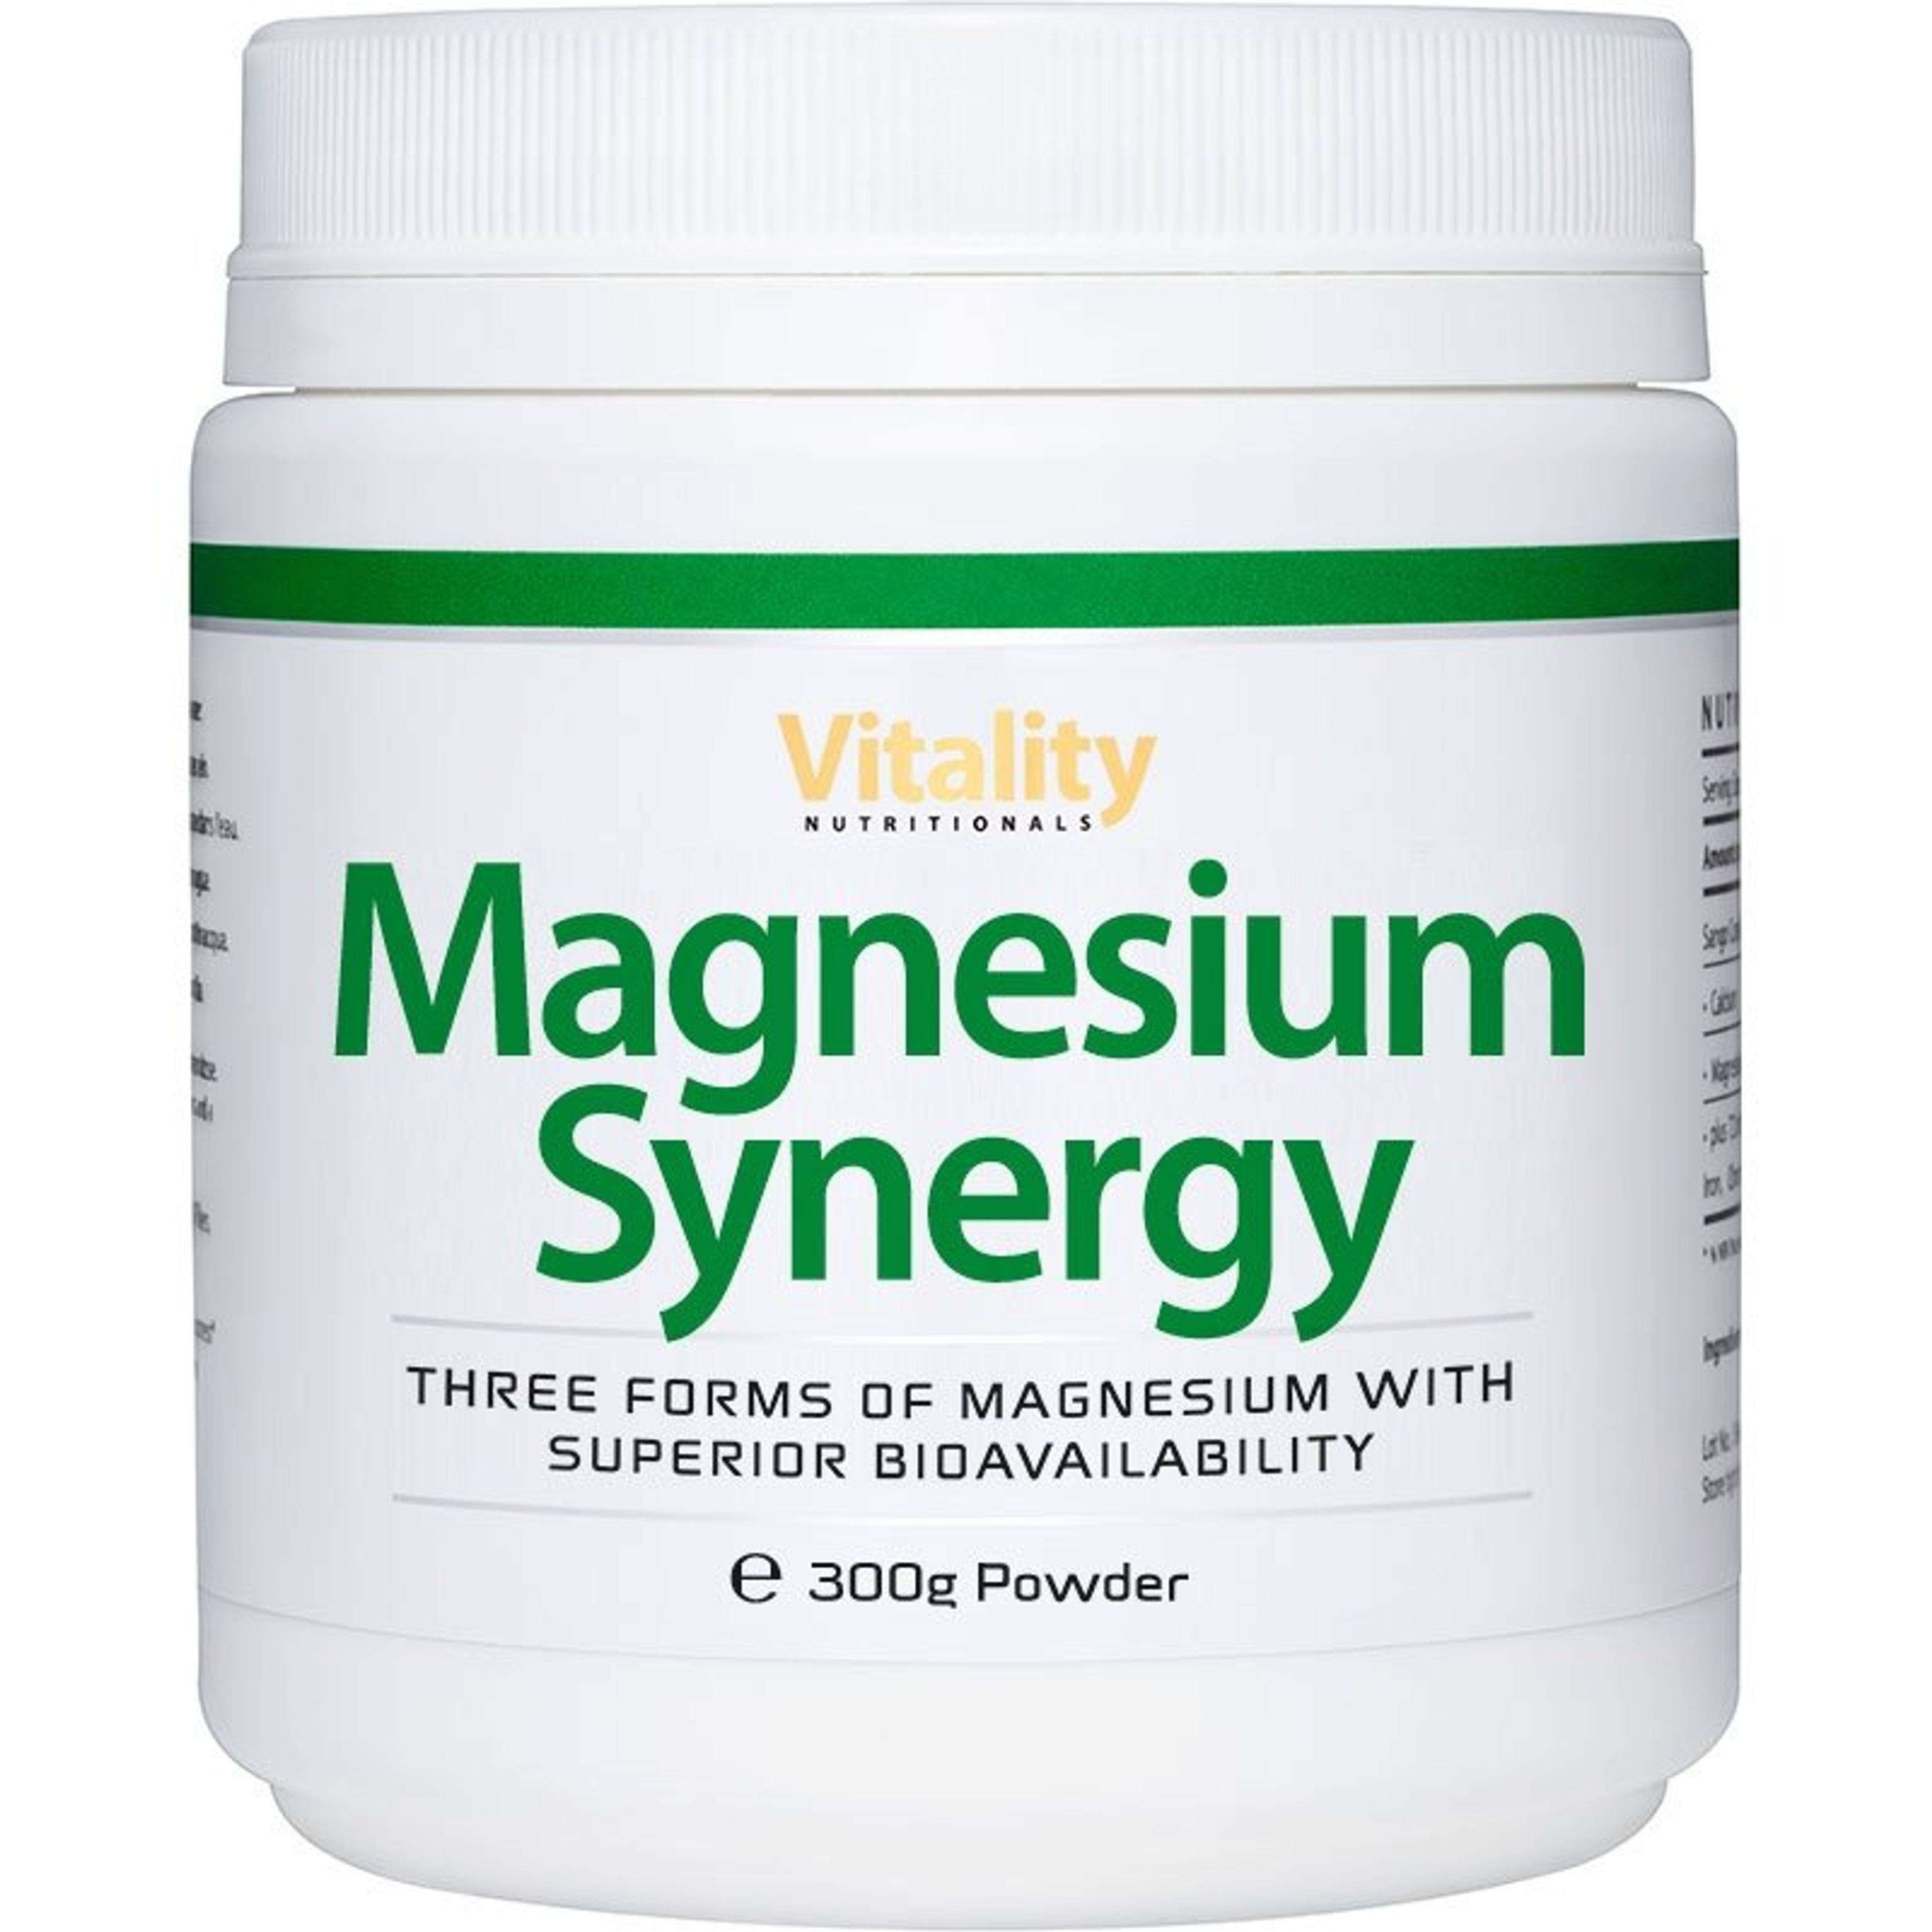 Magnesium Synergy Powder - 300 g Powder